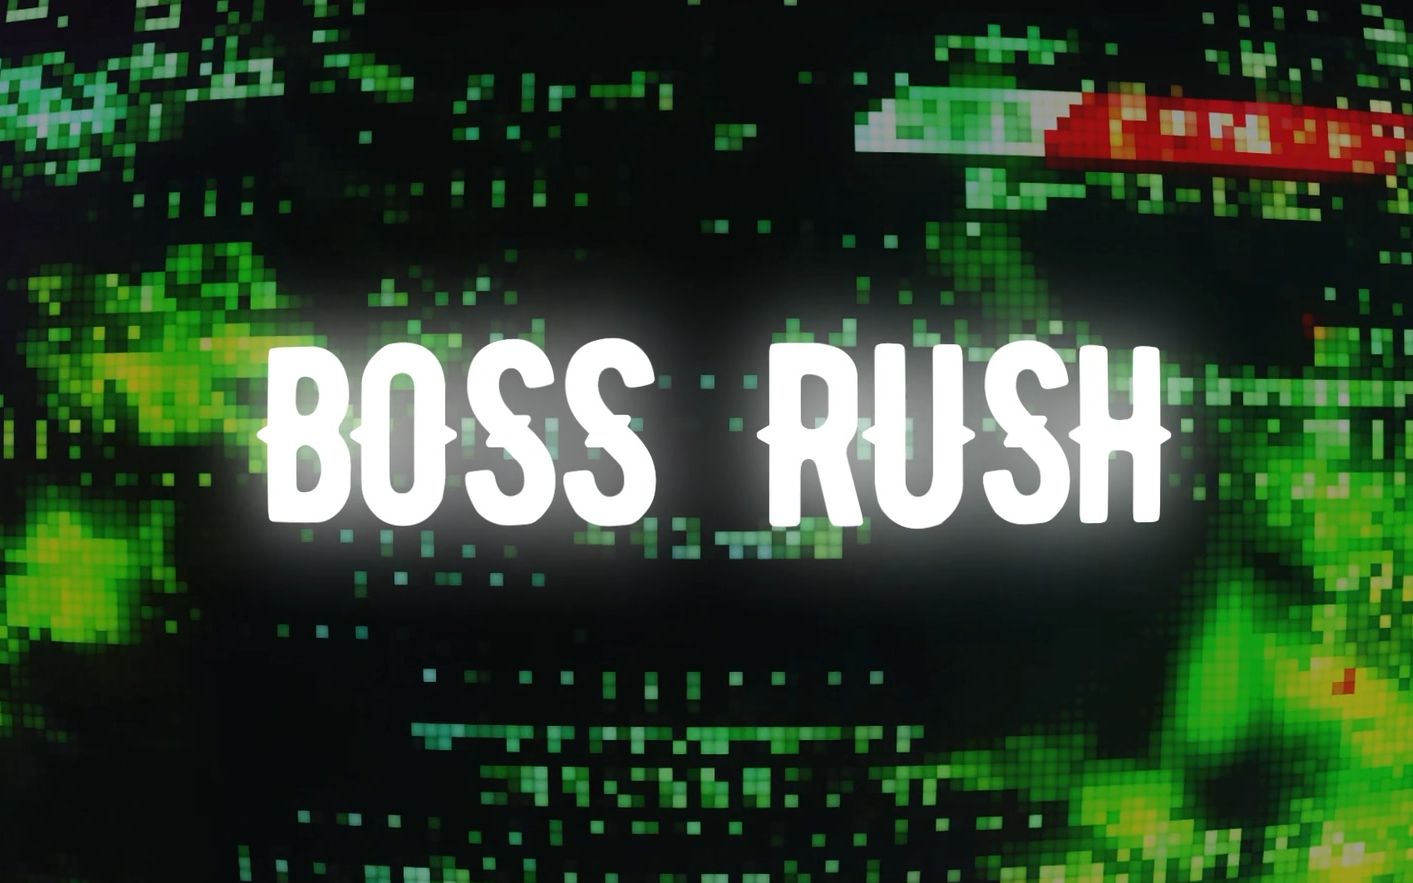 电棍：Boss Rush